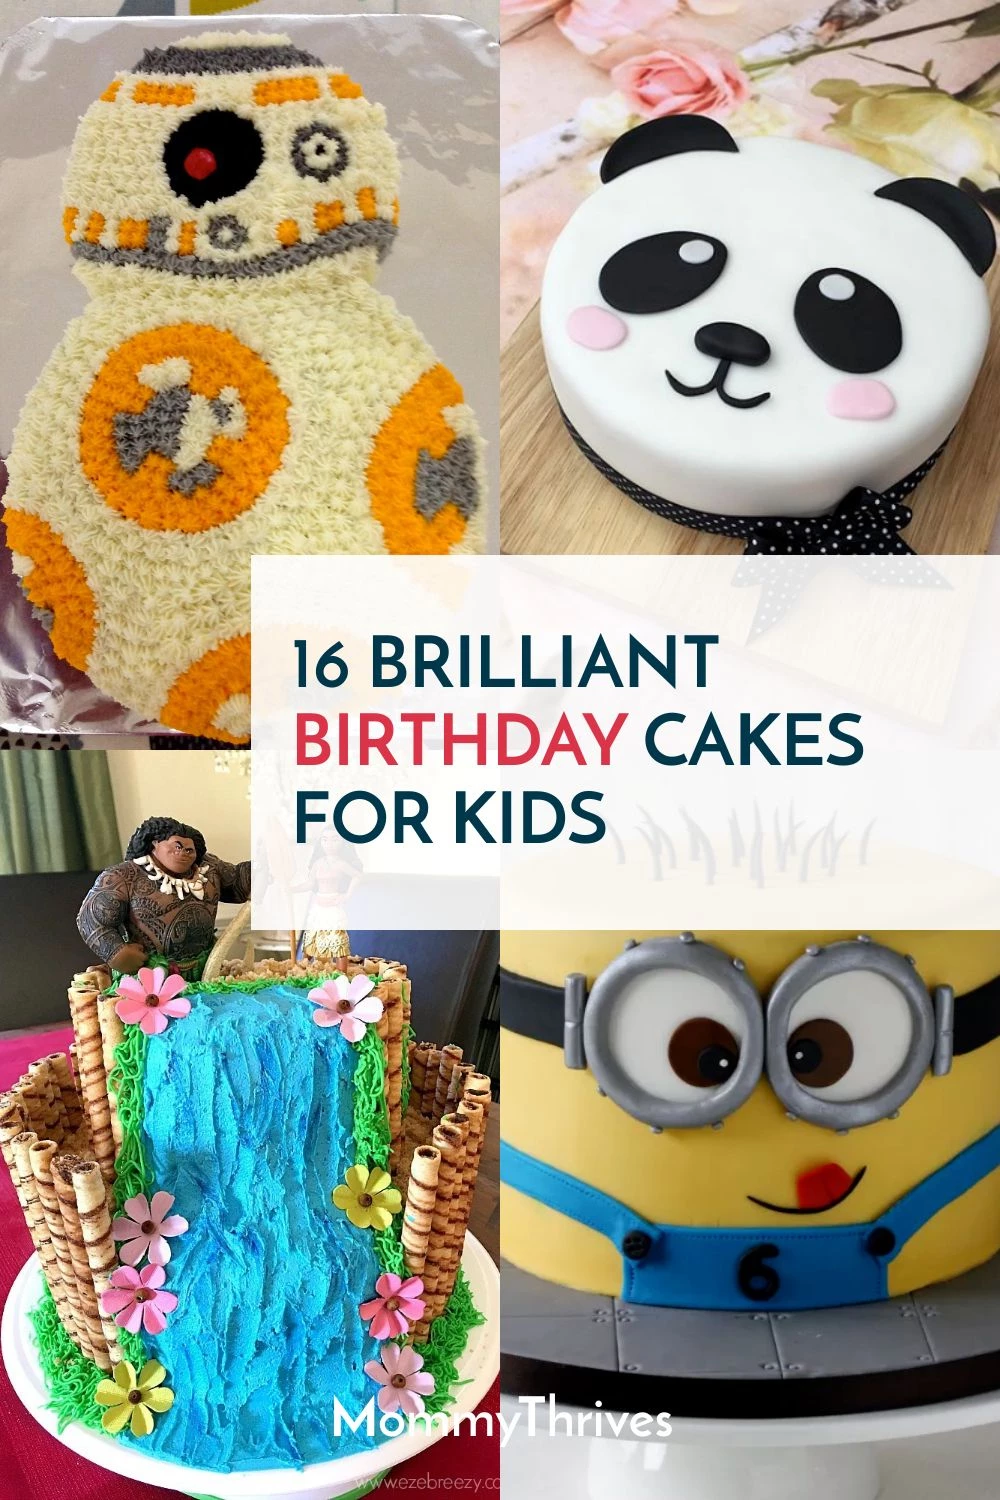 16 Brilliant Birthday Cakes For Kids - MommyThrives